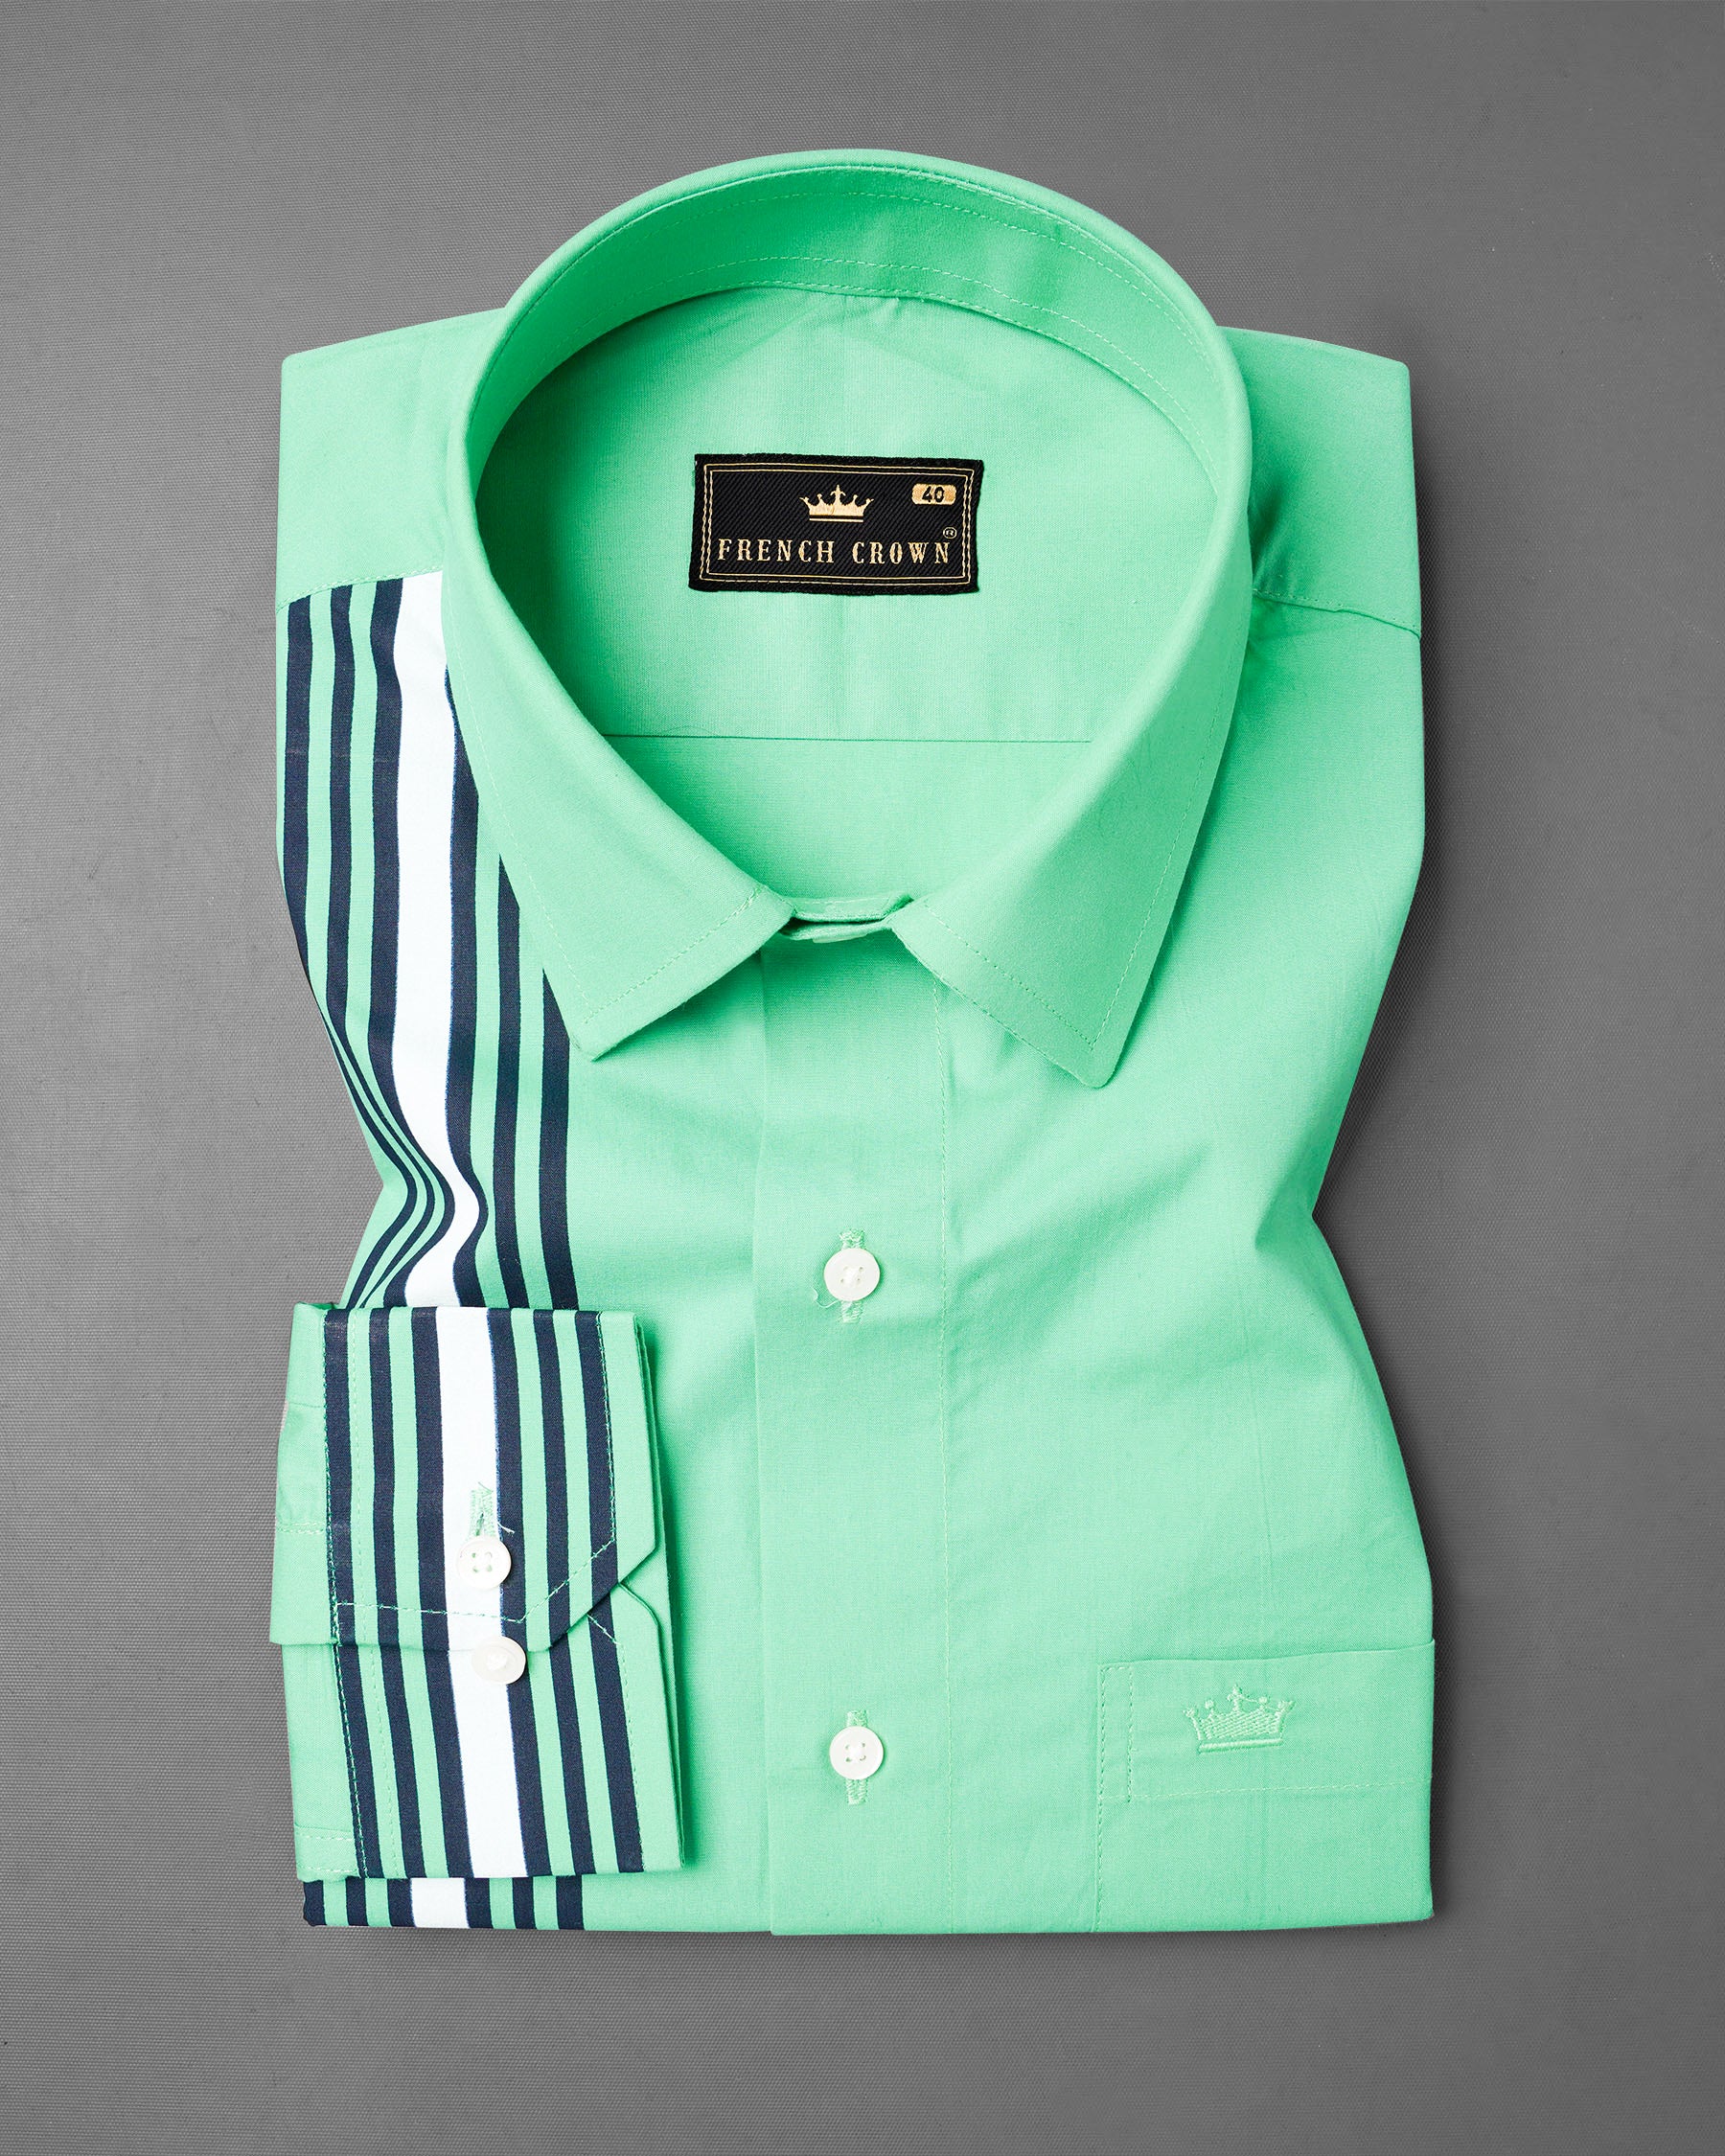 Bermuda Green with Striped Premium Cotton Shirt 7394-38,7394-38,7394-39,7394-39,7394-40,7394-40,7394-42,7394-42,7394-44,7394-44,7394-46,7394-46,7394-48,7394-48,7394-50,7394-50,7394-52,7394-52